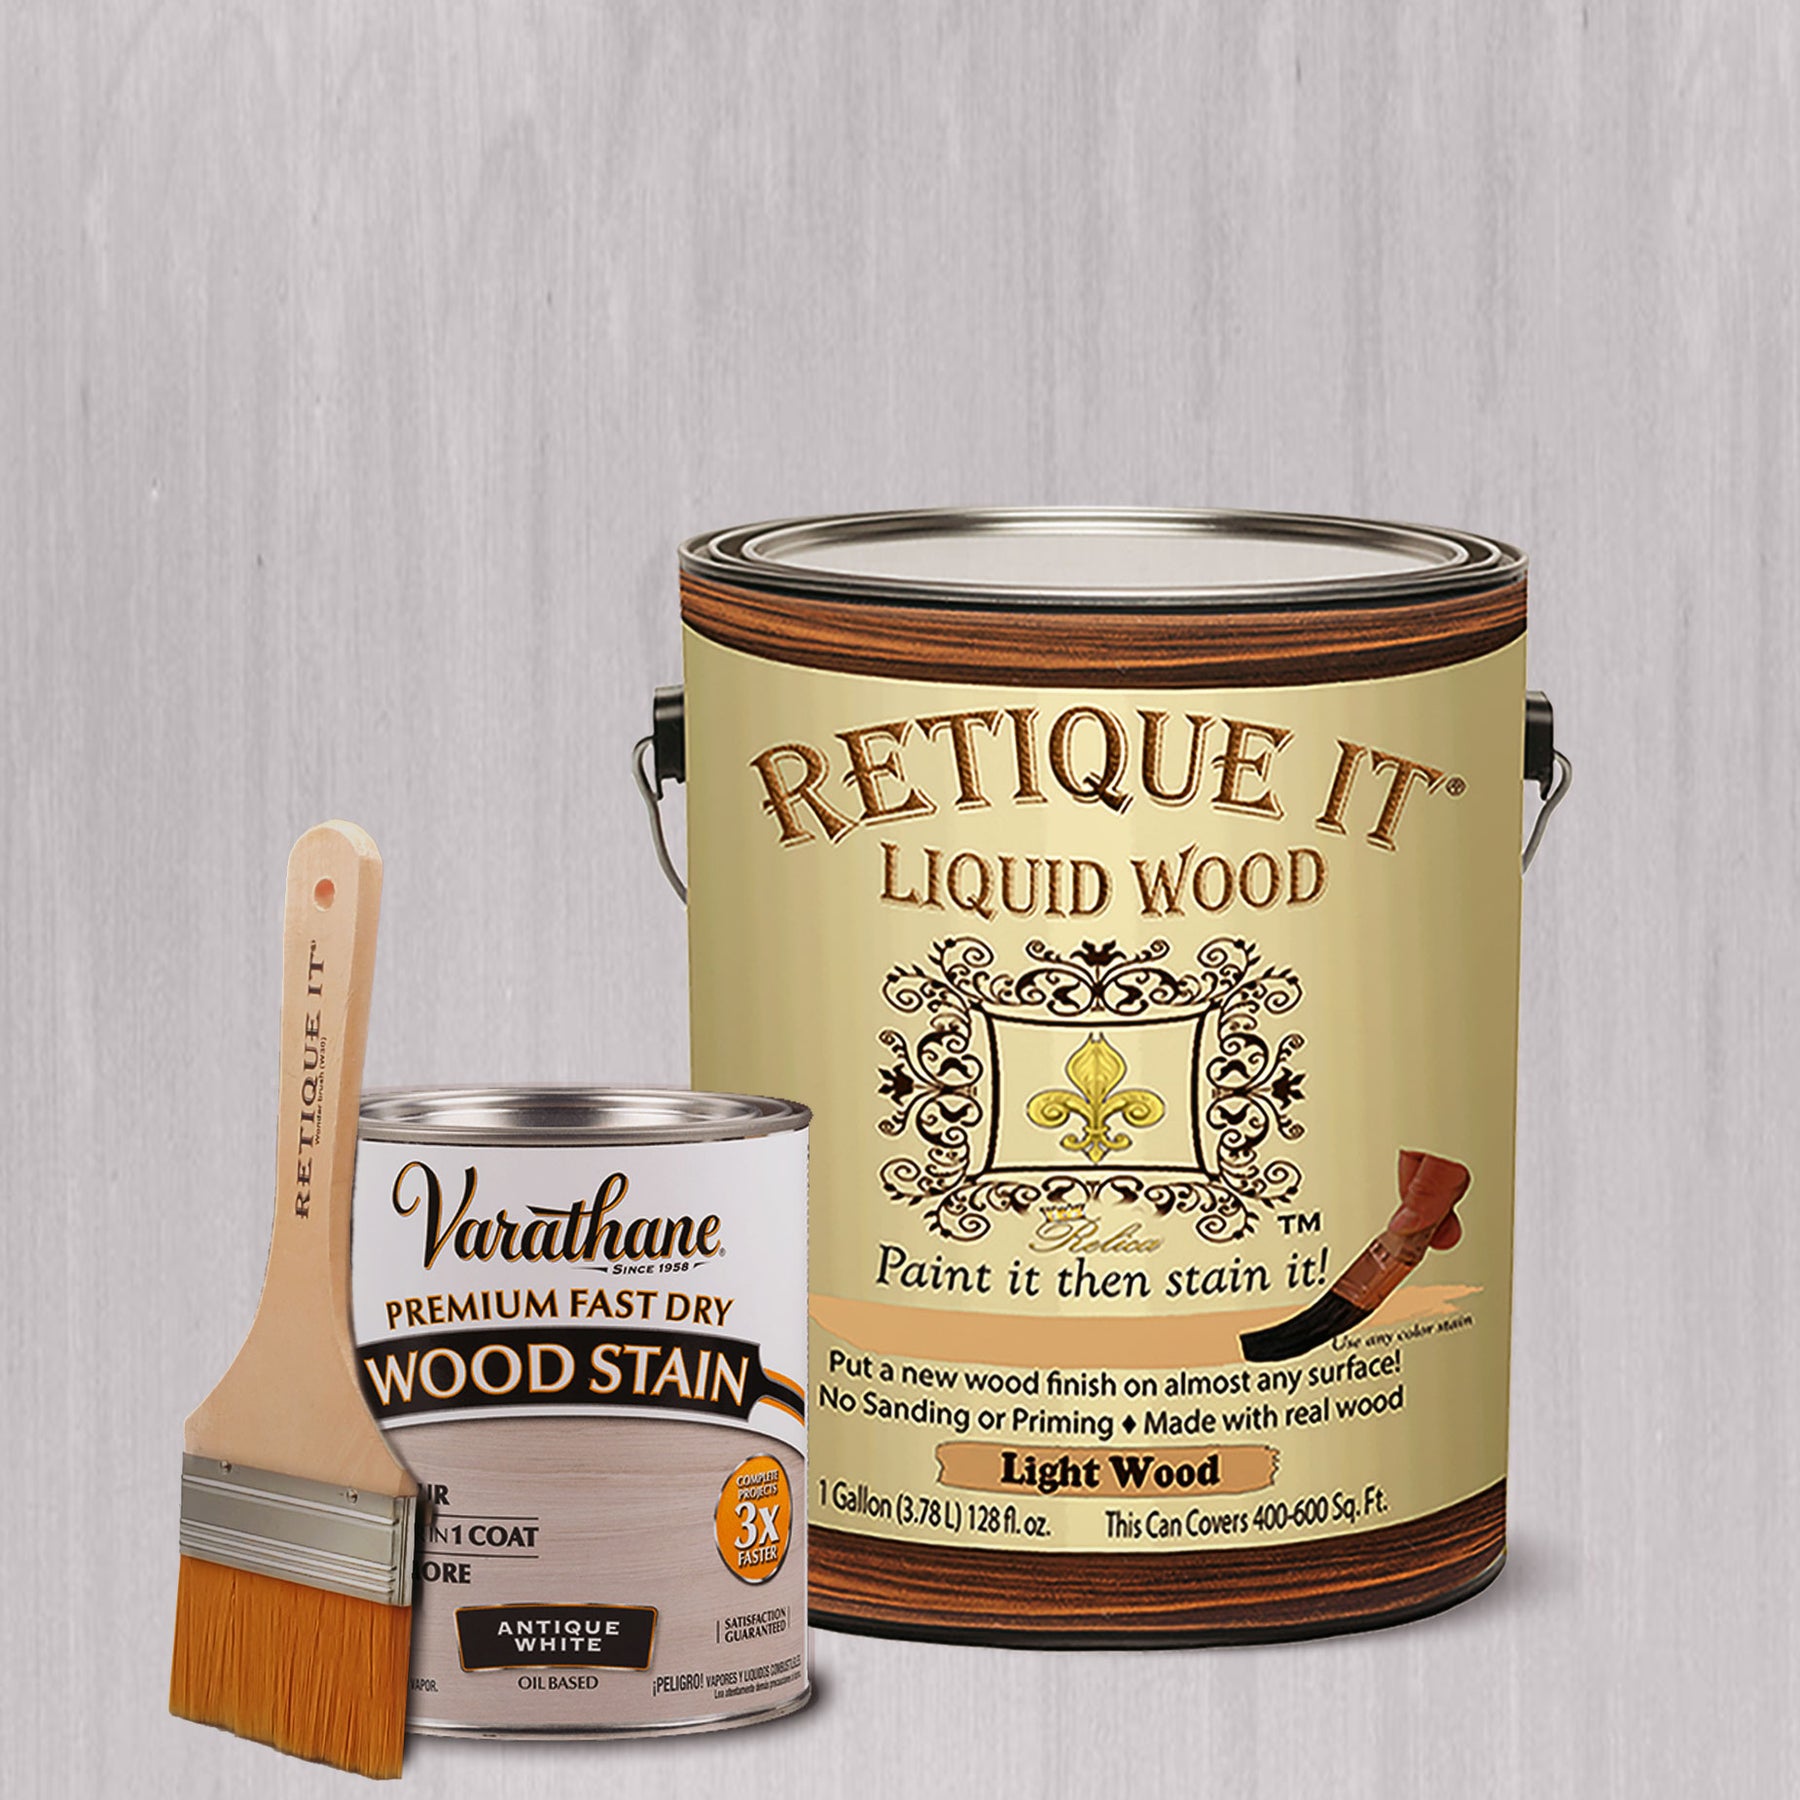 Retique It Liquid Wood - Light Wood Half Pint (8oz) - Paint It